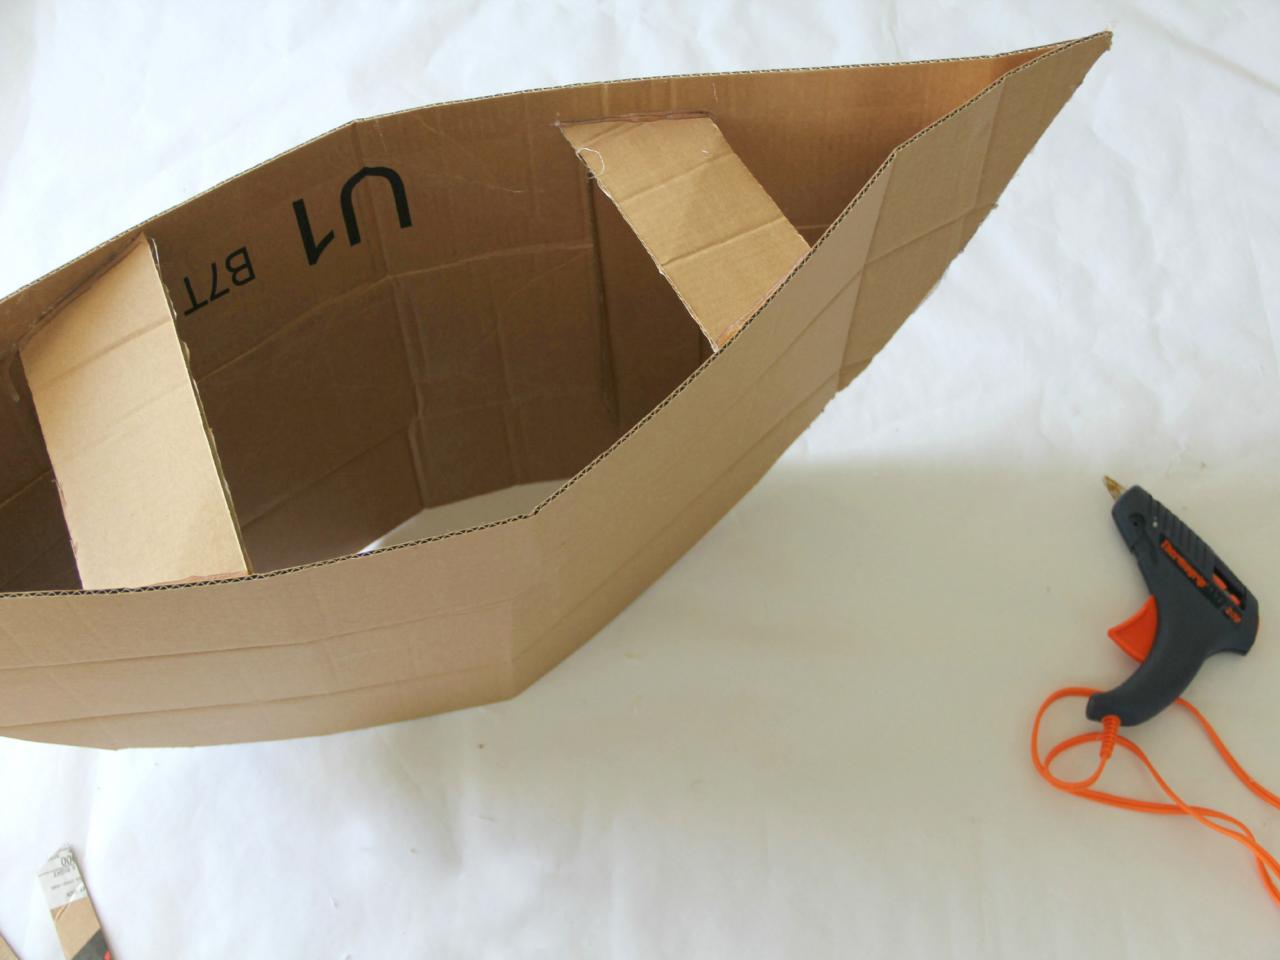 https://www.guidepatterns.com//wp-content/uploads/2020/06/Build-A-Boat-Prop-Halloween-Cardboard.jpg